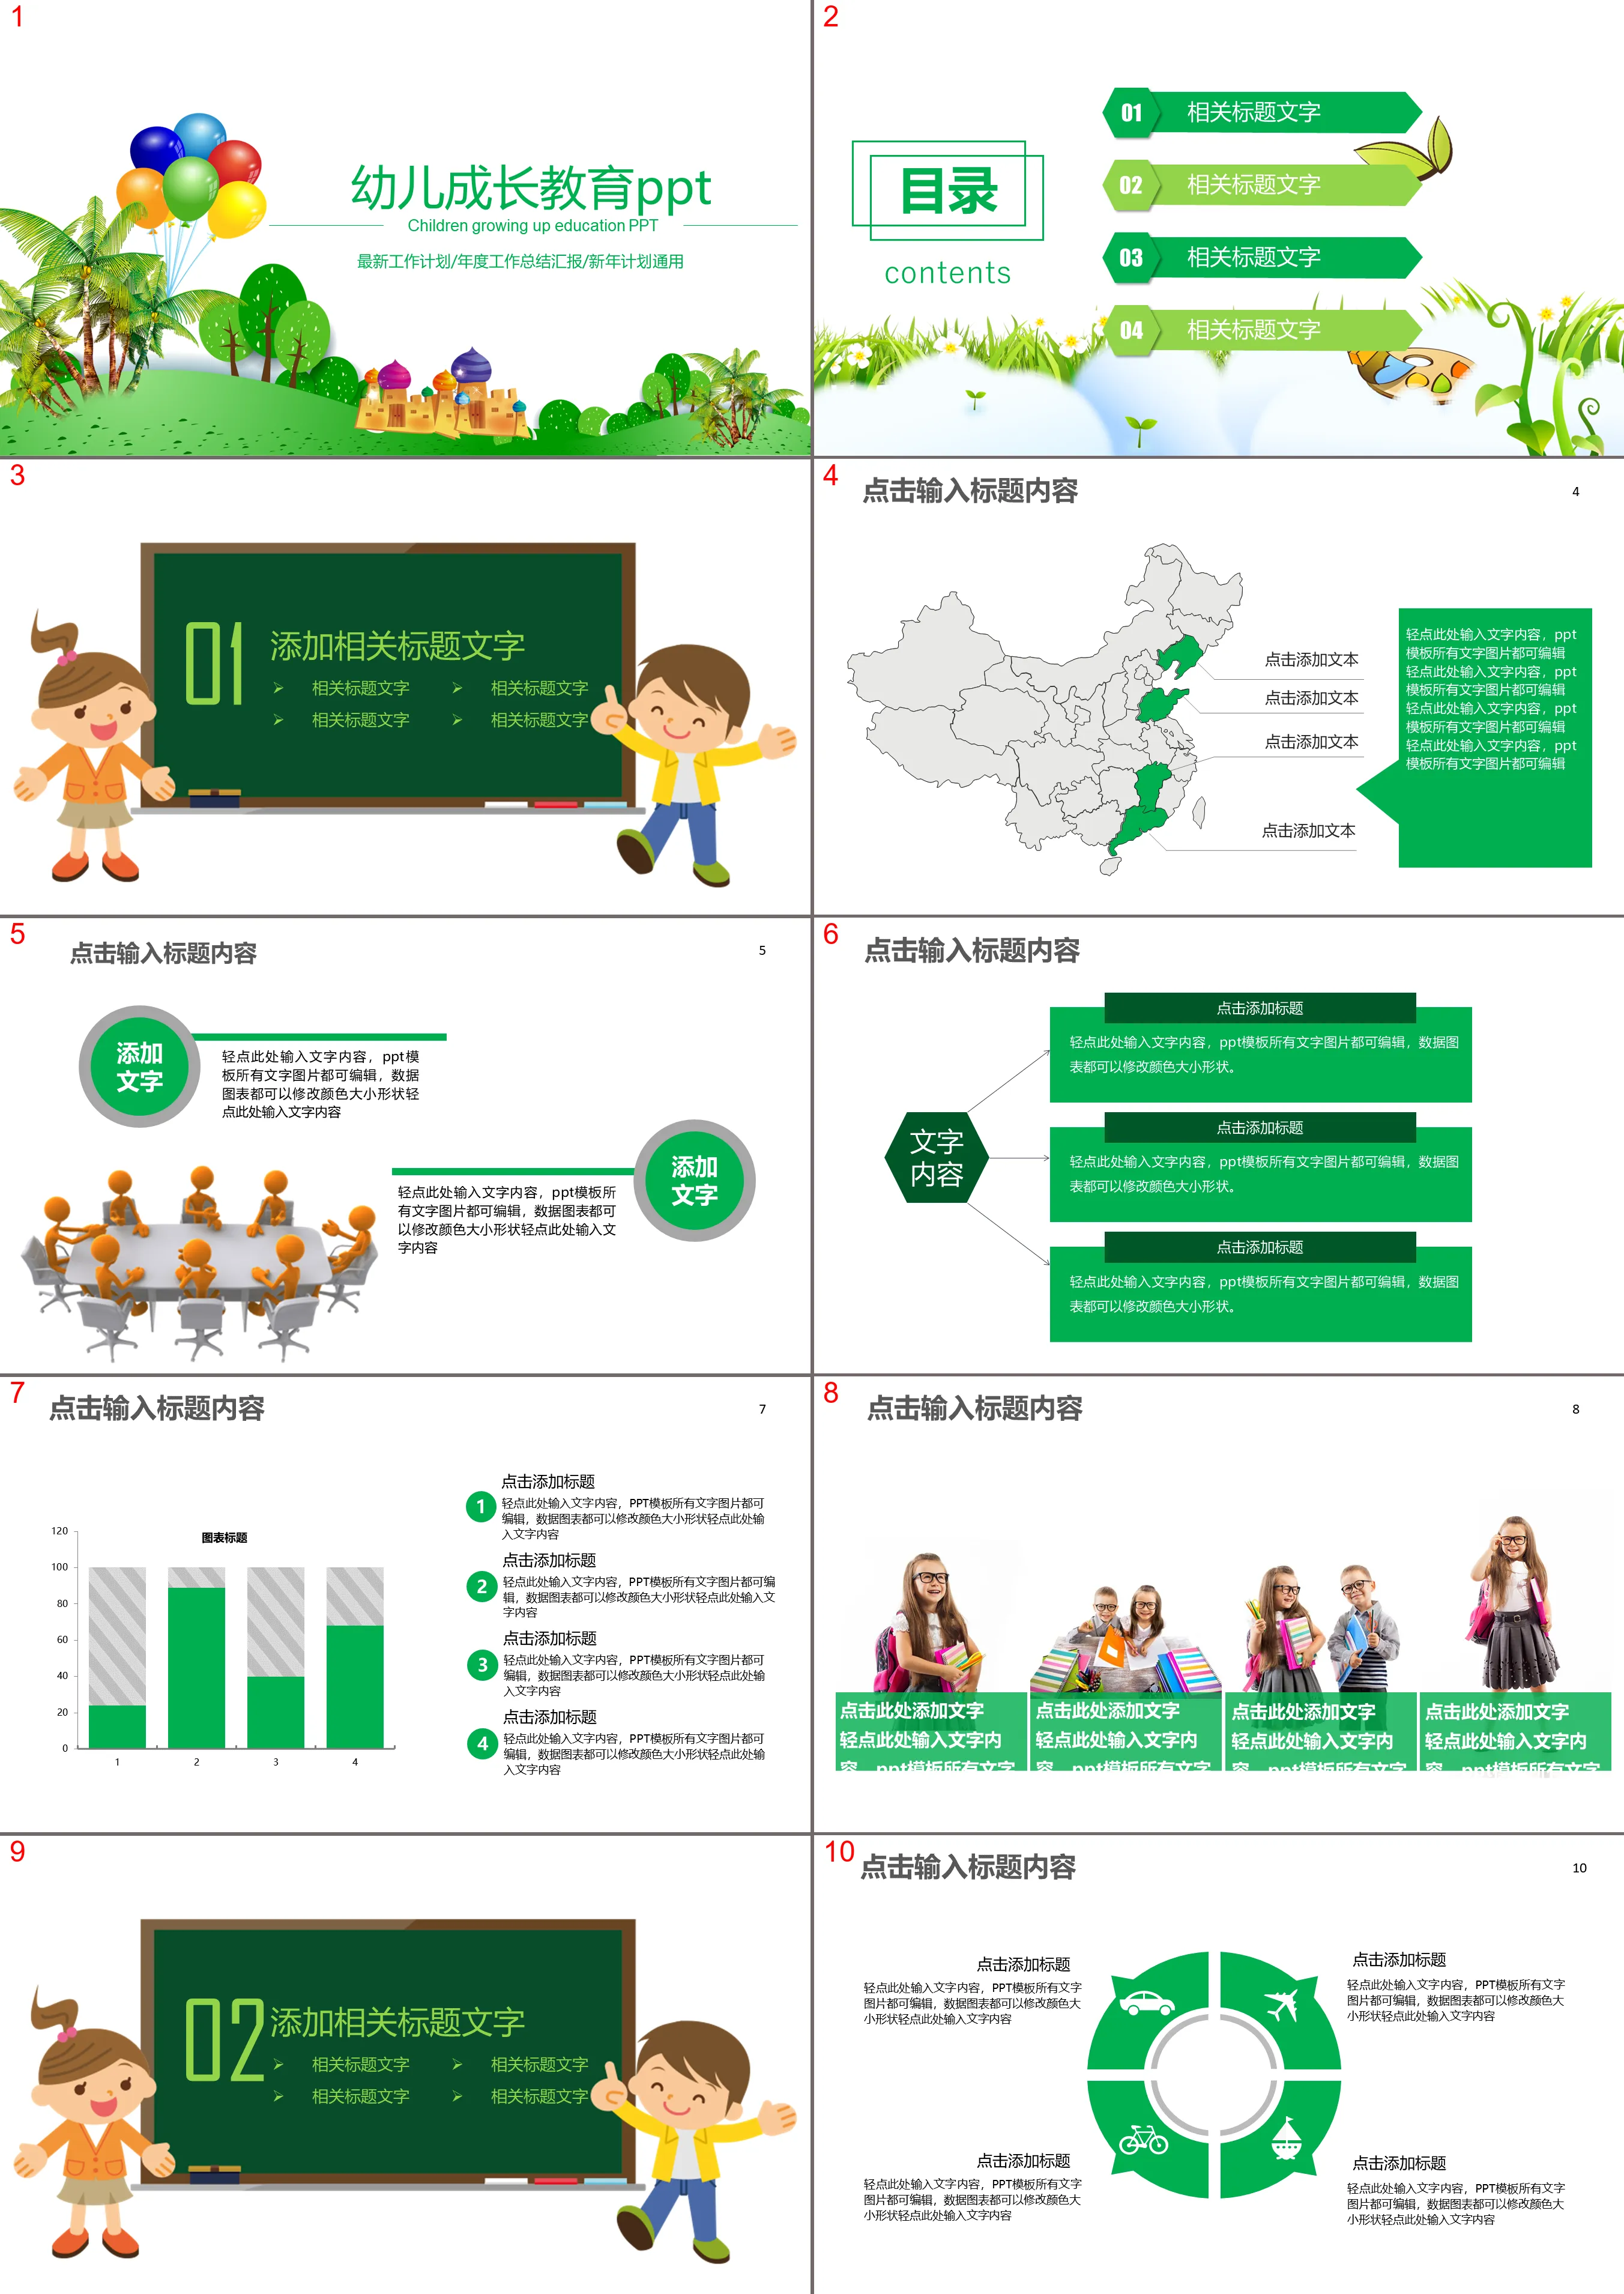 Cartoon castle balloon background children's growth education PPT template